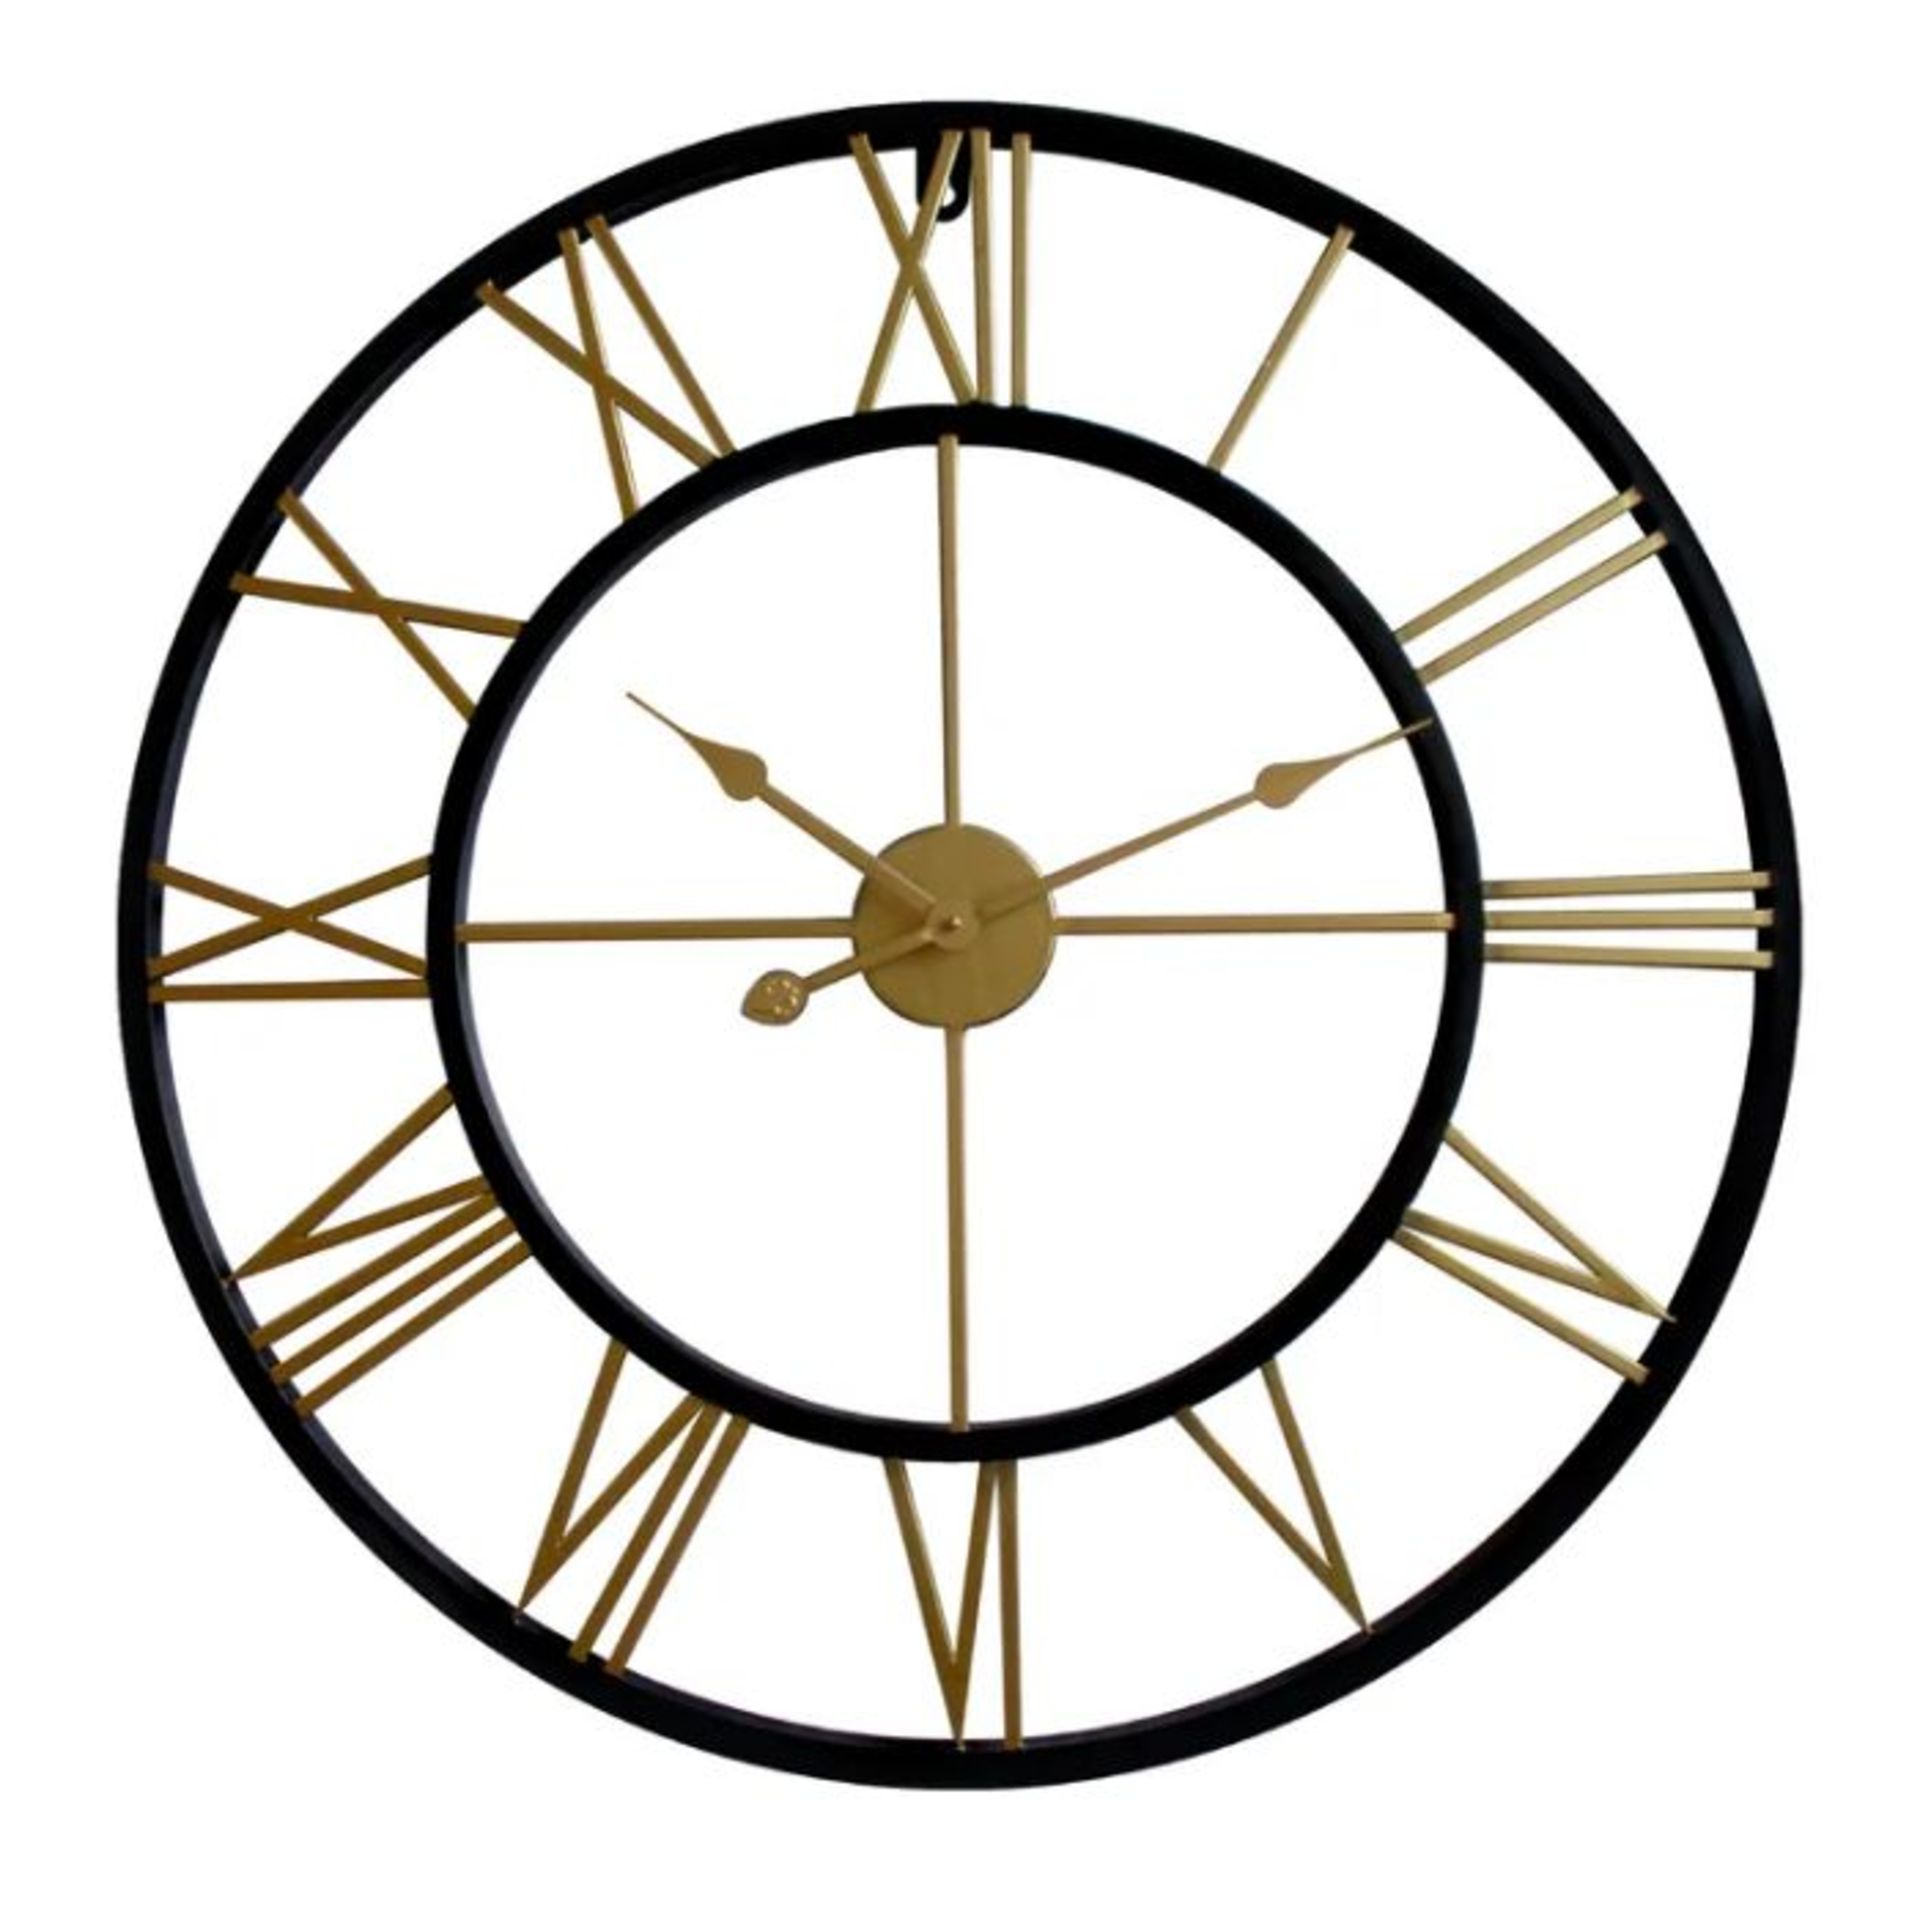 Three Posts, Hackney Wall Clock (BLACK/BRONZE FINISH) (76cm W) - RRP £60.99 (HVO59062 - 29121/28)